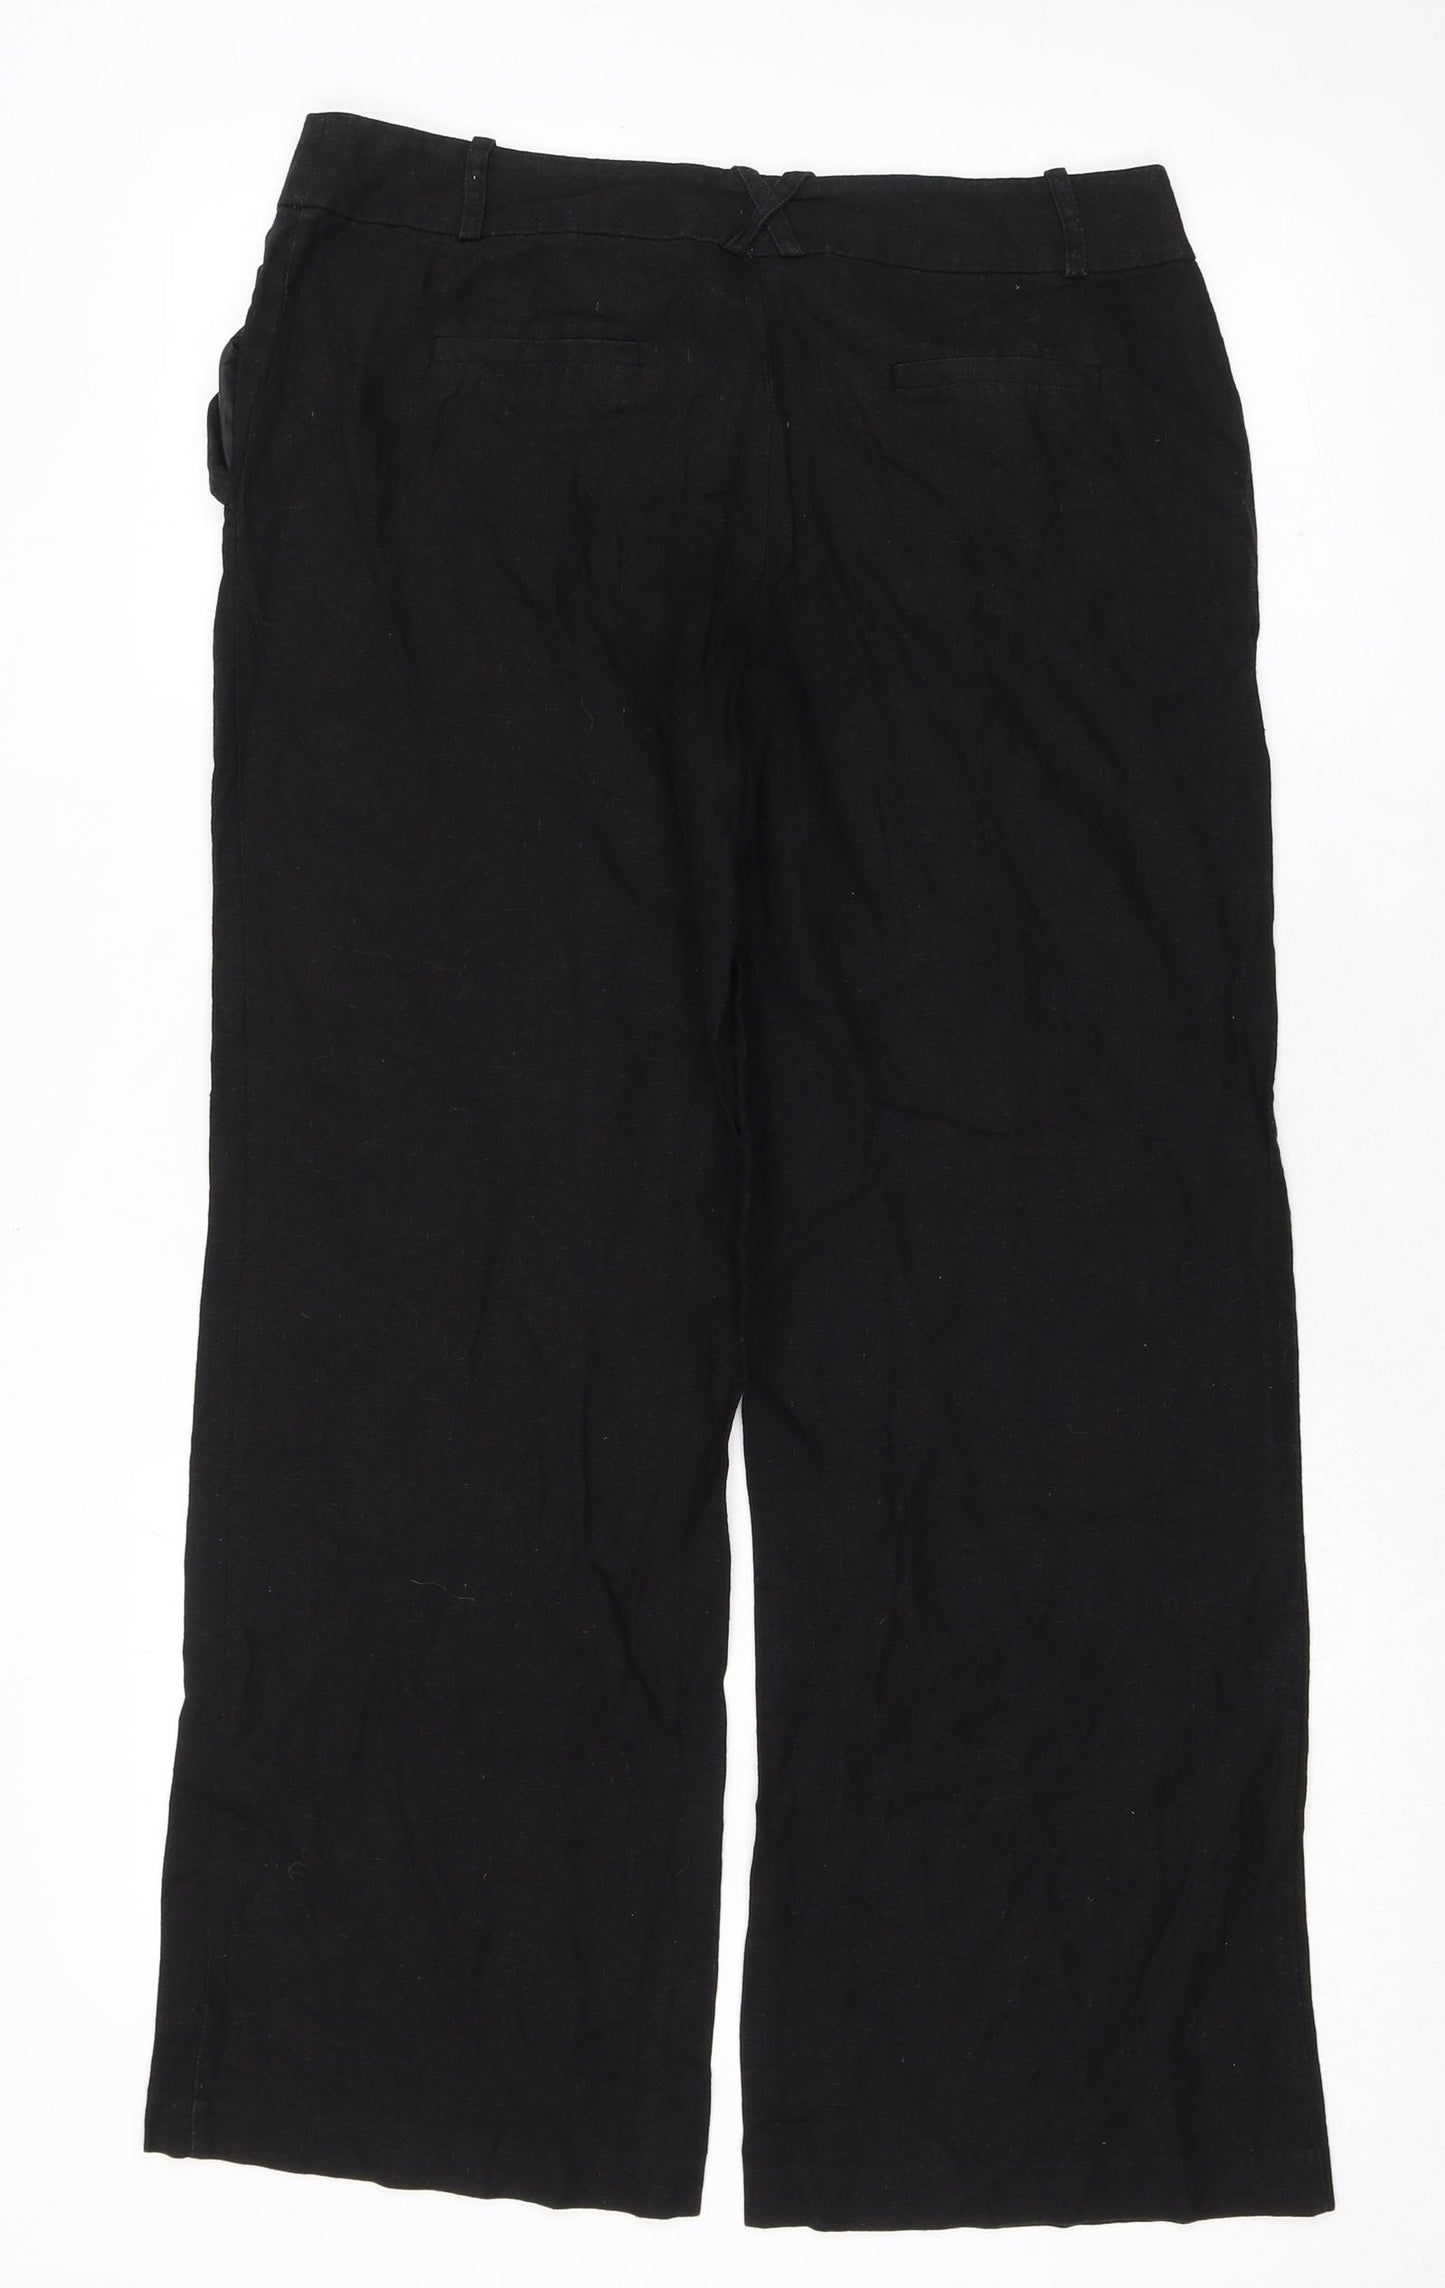 New Look Womens Black Linen Trousers Size 12 L29 in Regular Zip